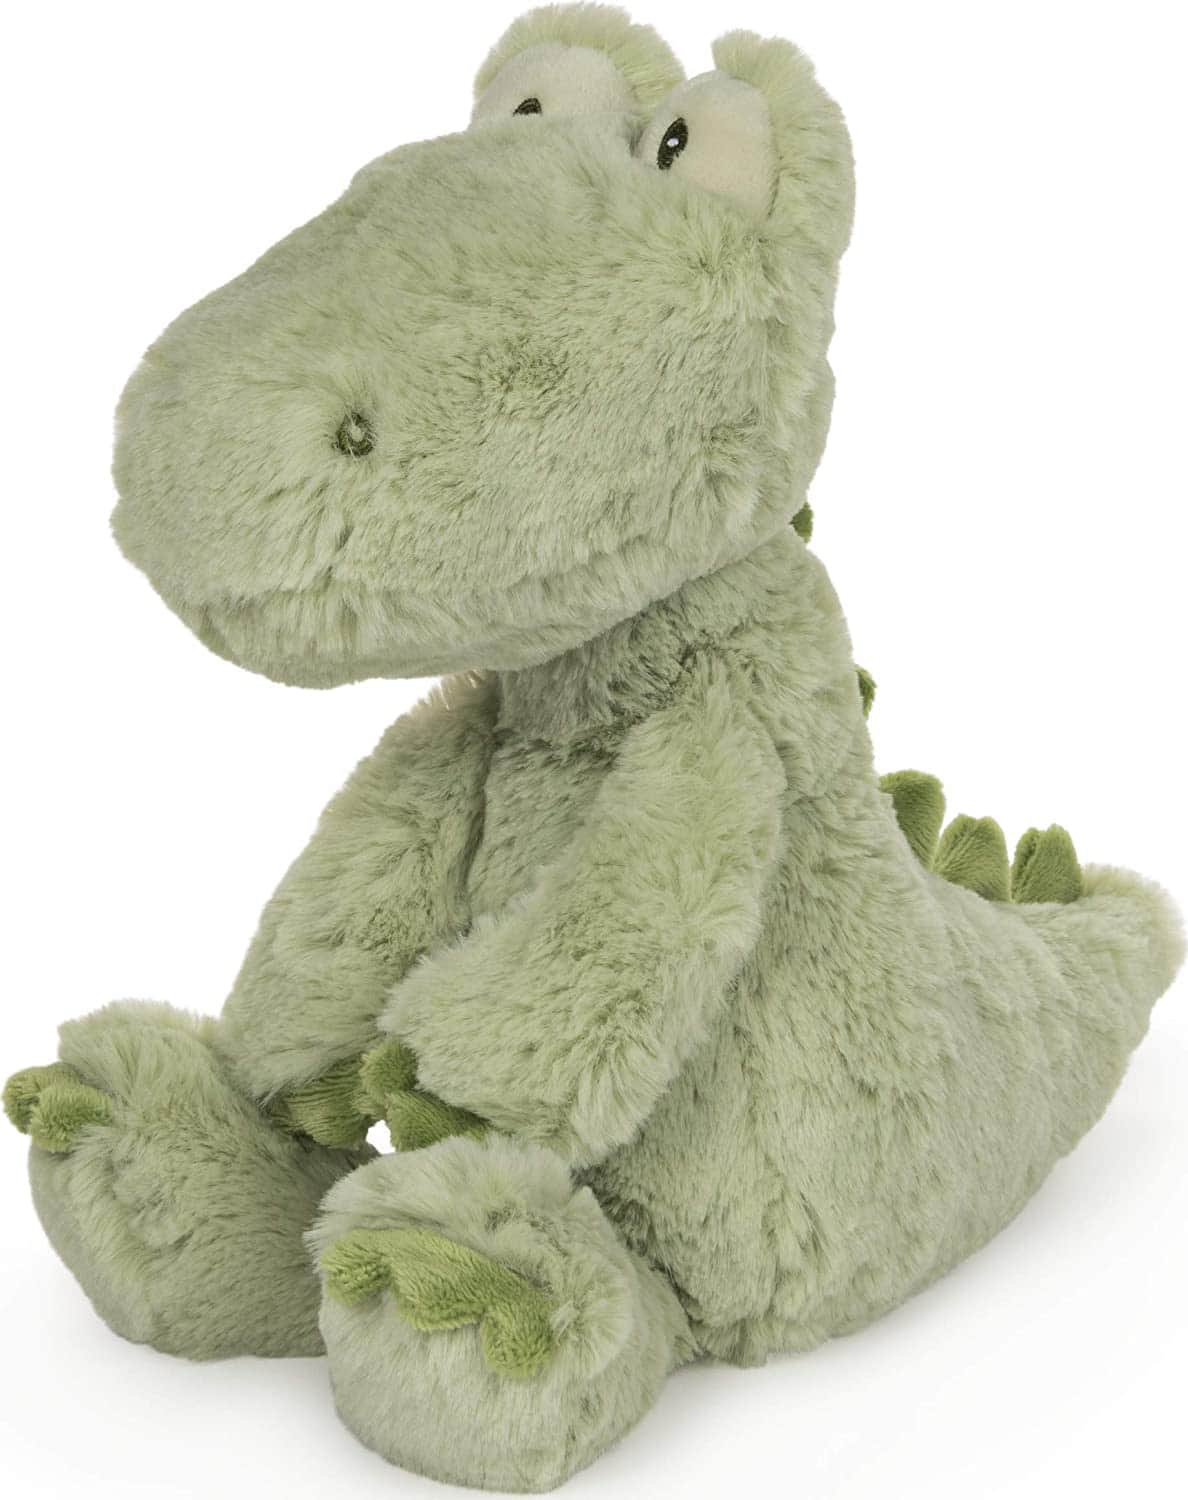 GUND 12" Baby Baby Toothpick Ensley Alligator Plush Stuffed Animal $6.90 + Free Shipping w/ Prime or $25+